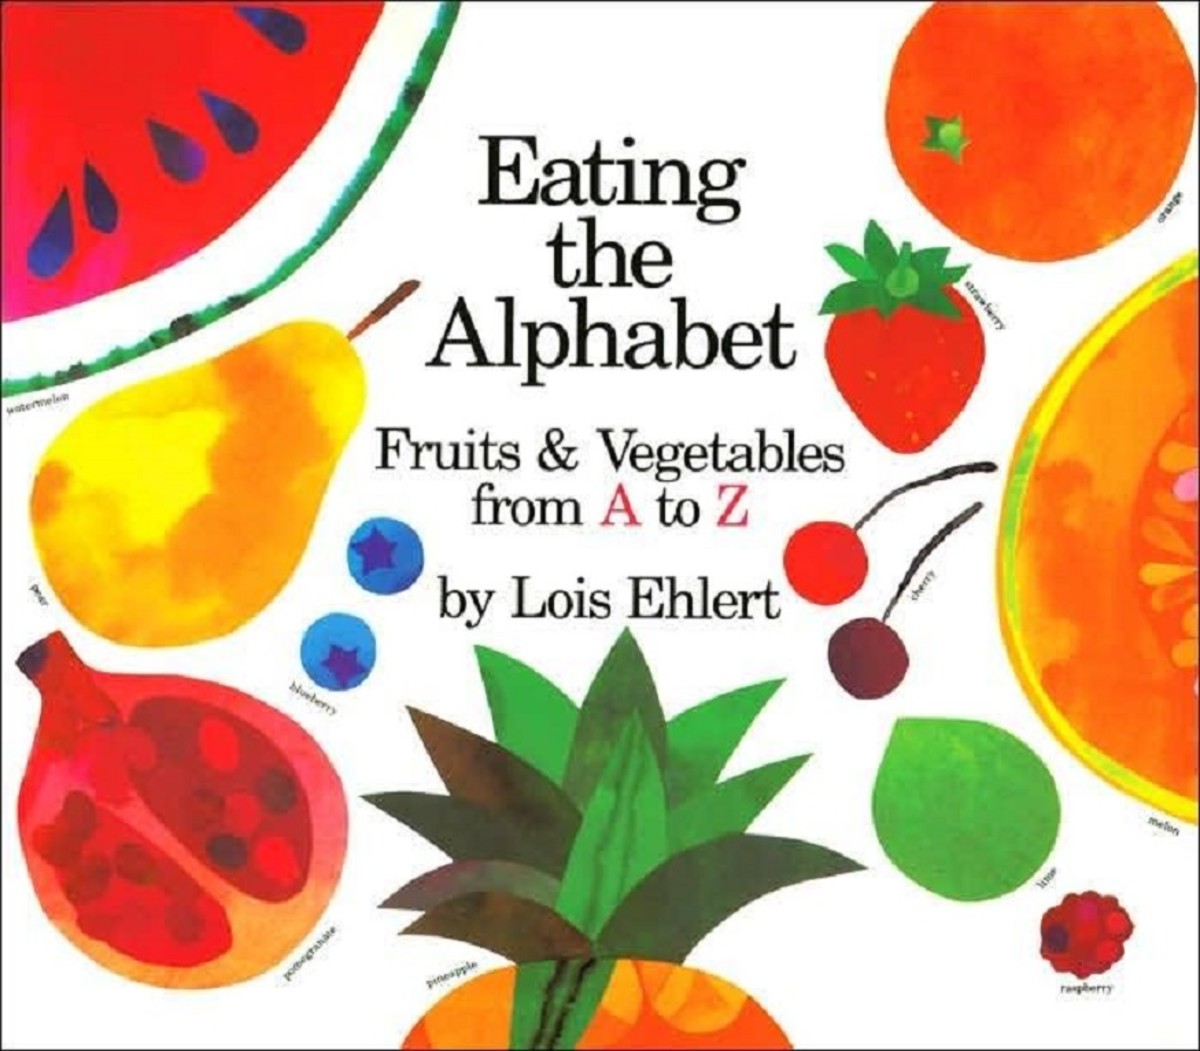 Eating the Alphabet by Lois Ehlert